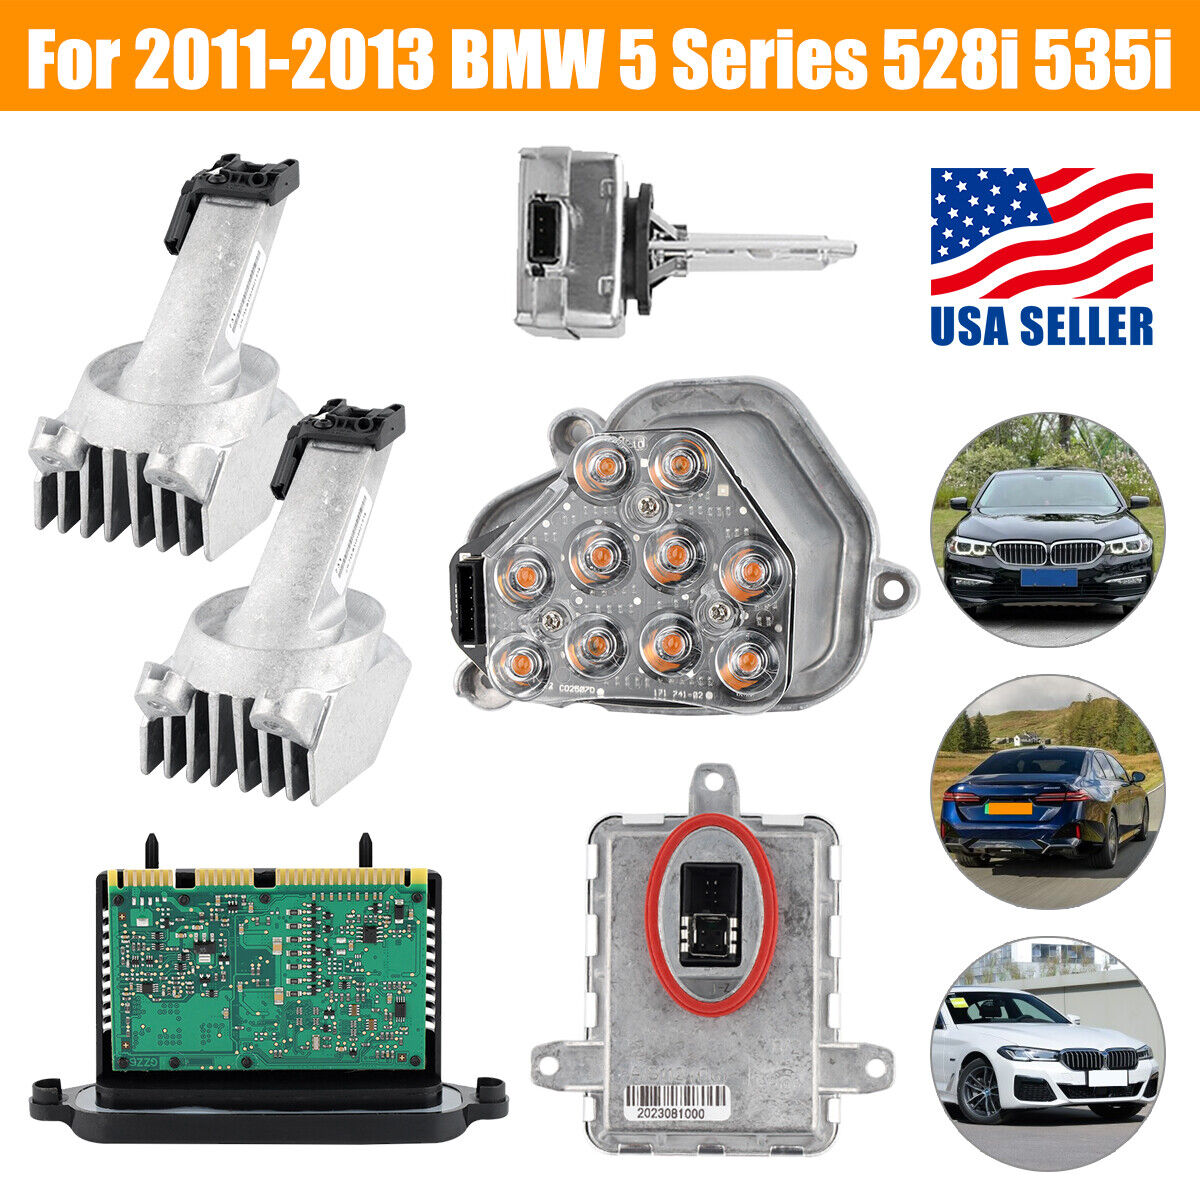 Xenon Ballast Bulb LED Module Diode Kit LH for 2011-2013 BMW 5 Series 528i 535i.